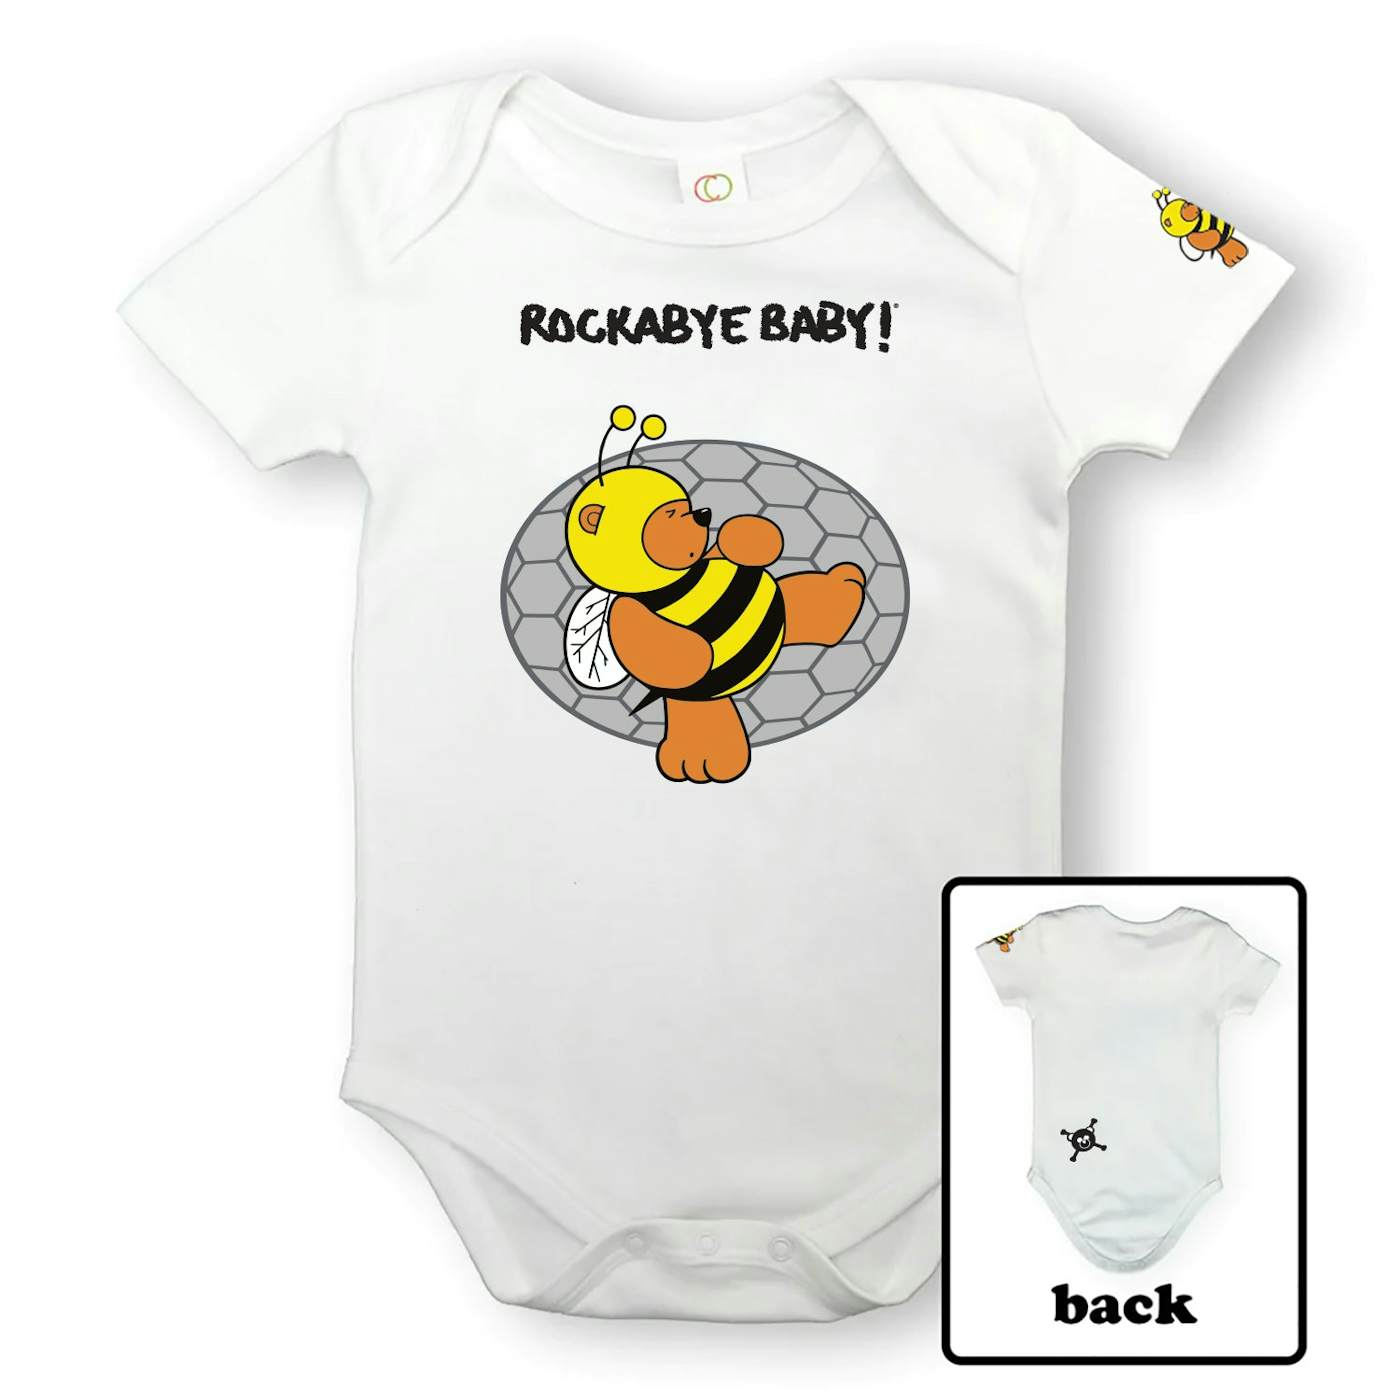 Rockabye Baby! Organic Baby Bodysuit ("Lullaby Renditions of Wu-Tang Clan" Album Art on Black or White)